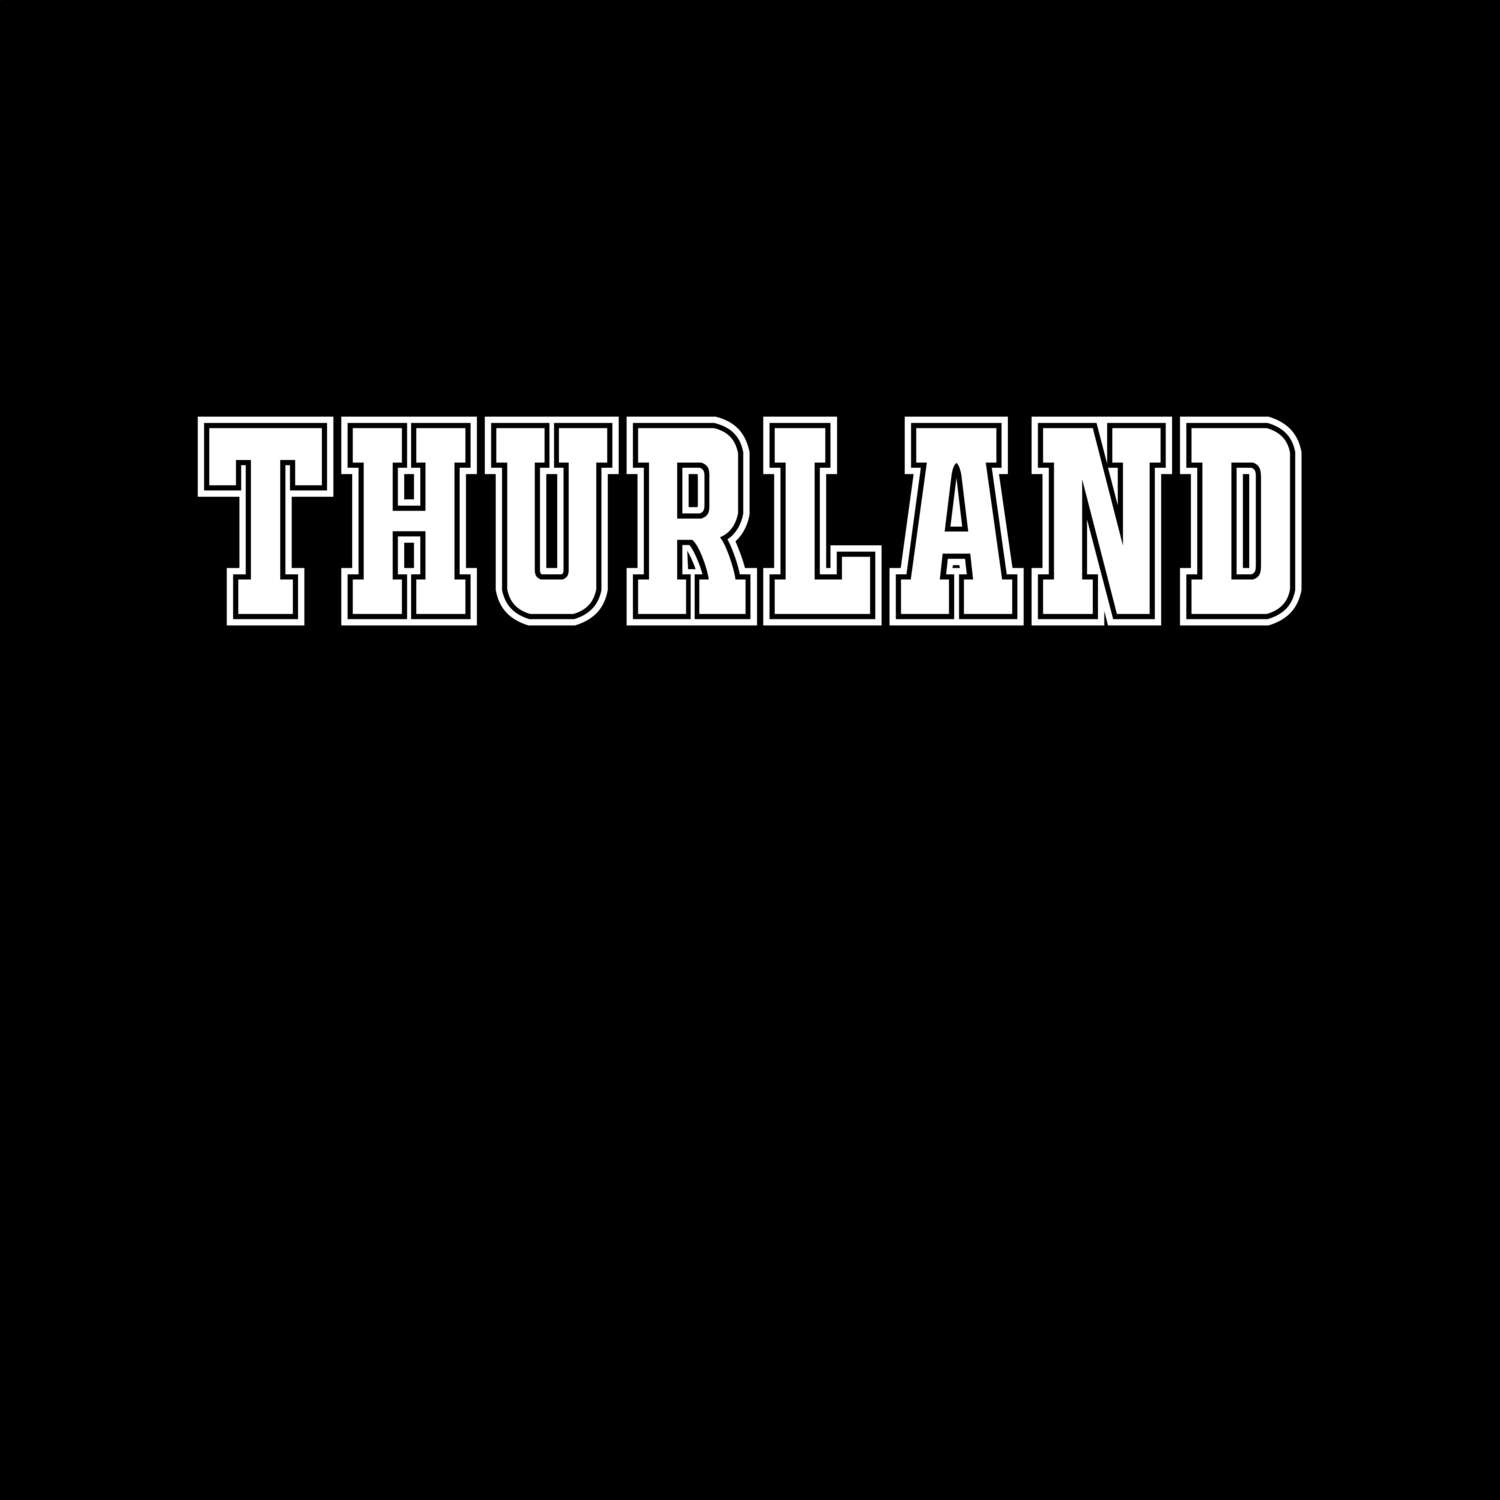 Thurland T-Shirt »Classic«